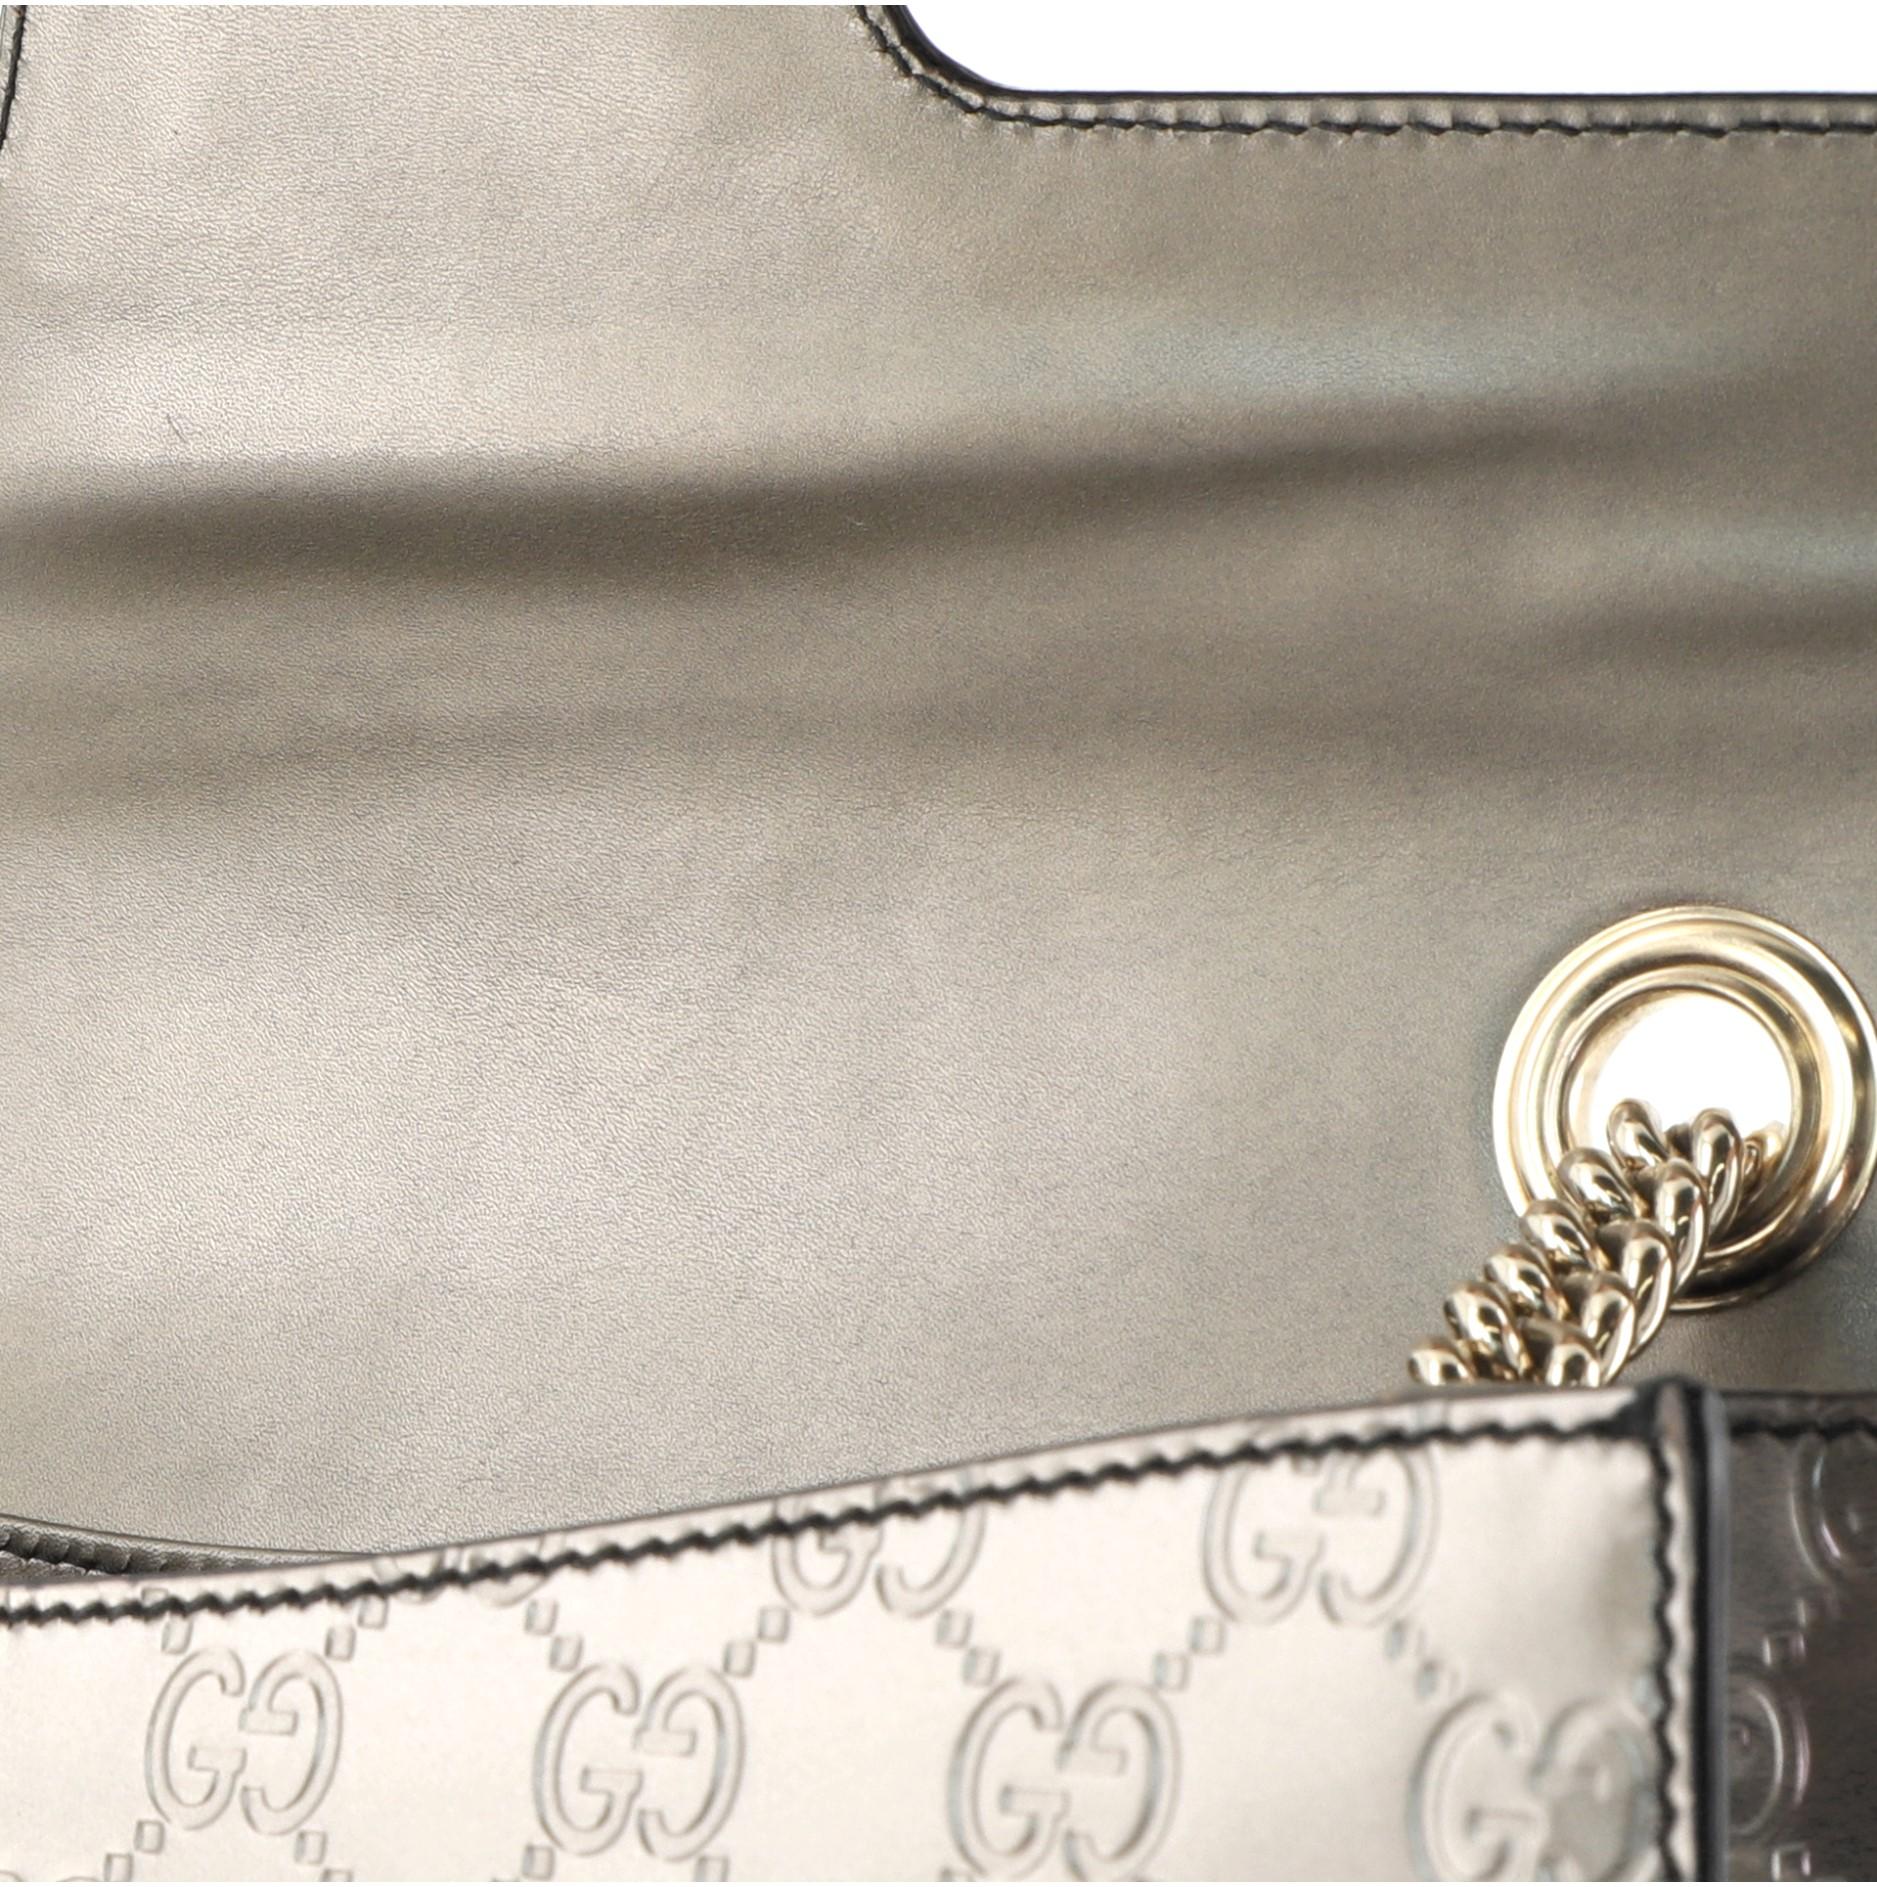 Gucci Emily Chain Flap Shoulder Bag Guccissima Patent Large 1